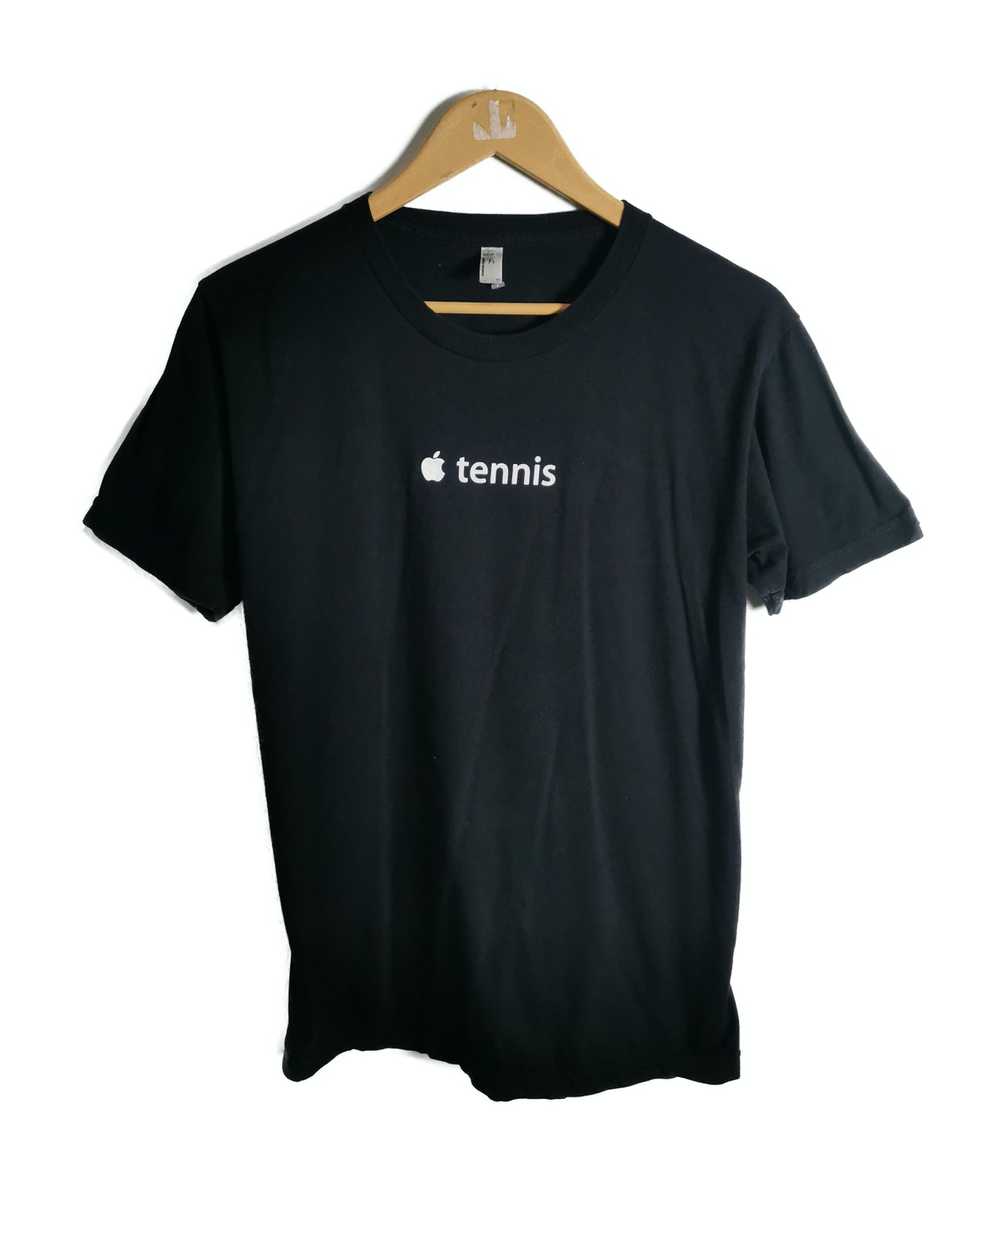 Apple Apple Inc iphone iMac Apple Tennis T shirt - image 1